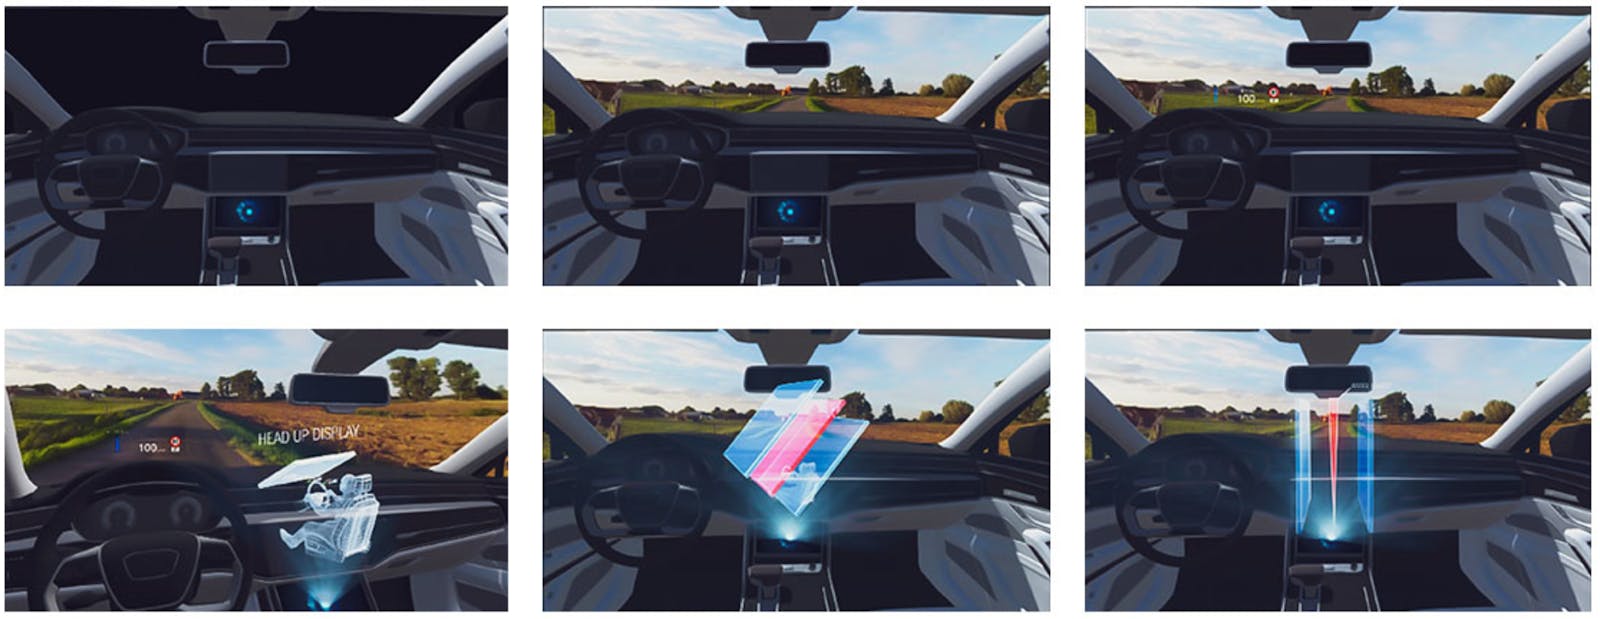 Sekisui glass VR driver seat render